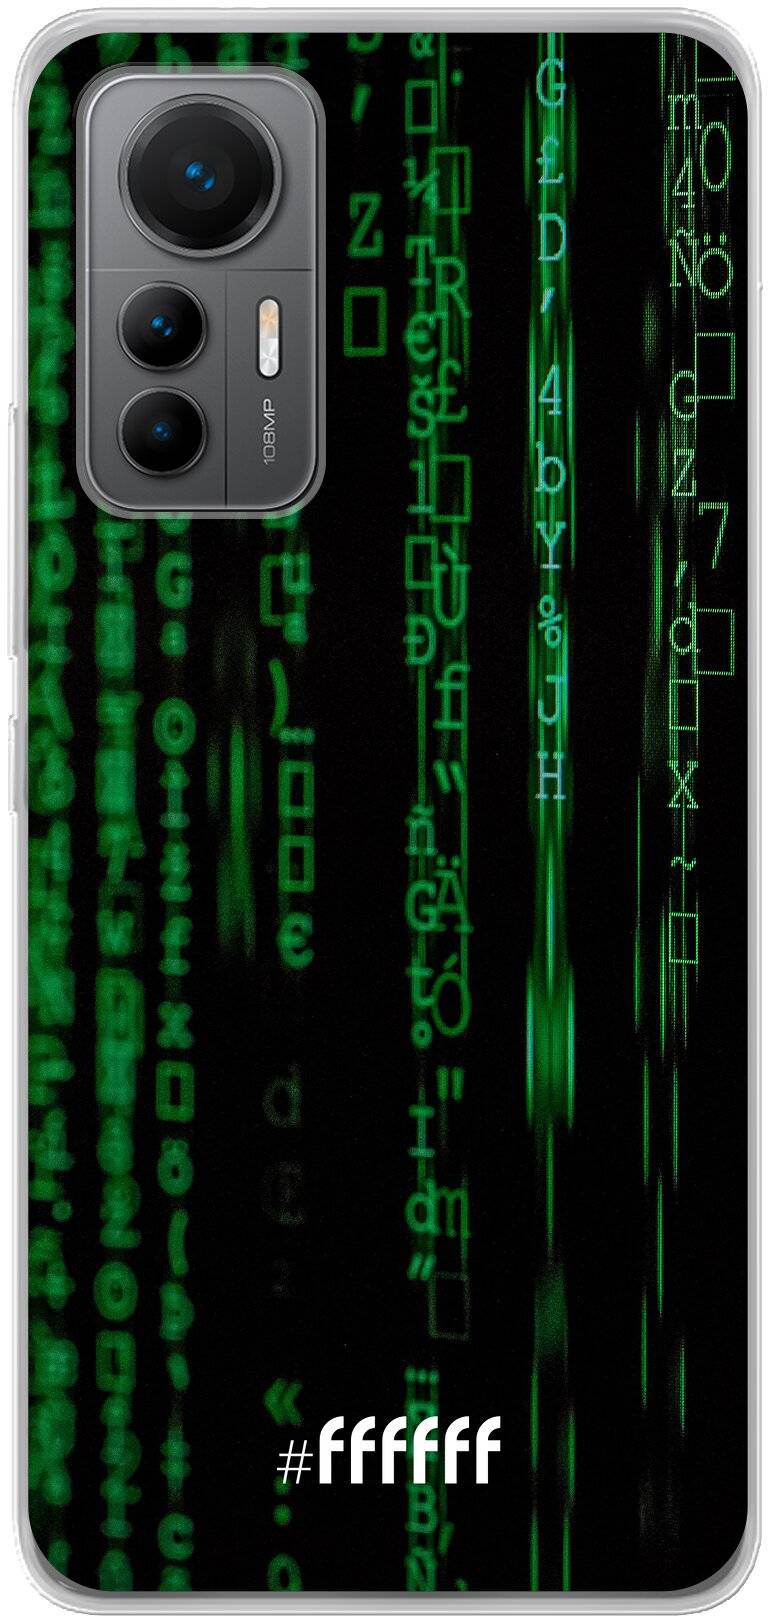 Hacking The Matrix 12 Lite